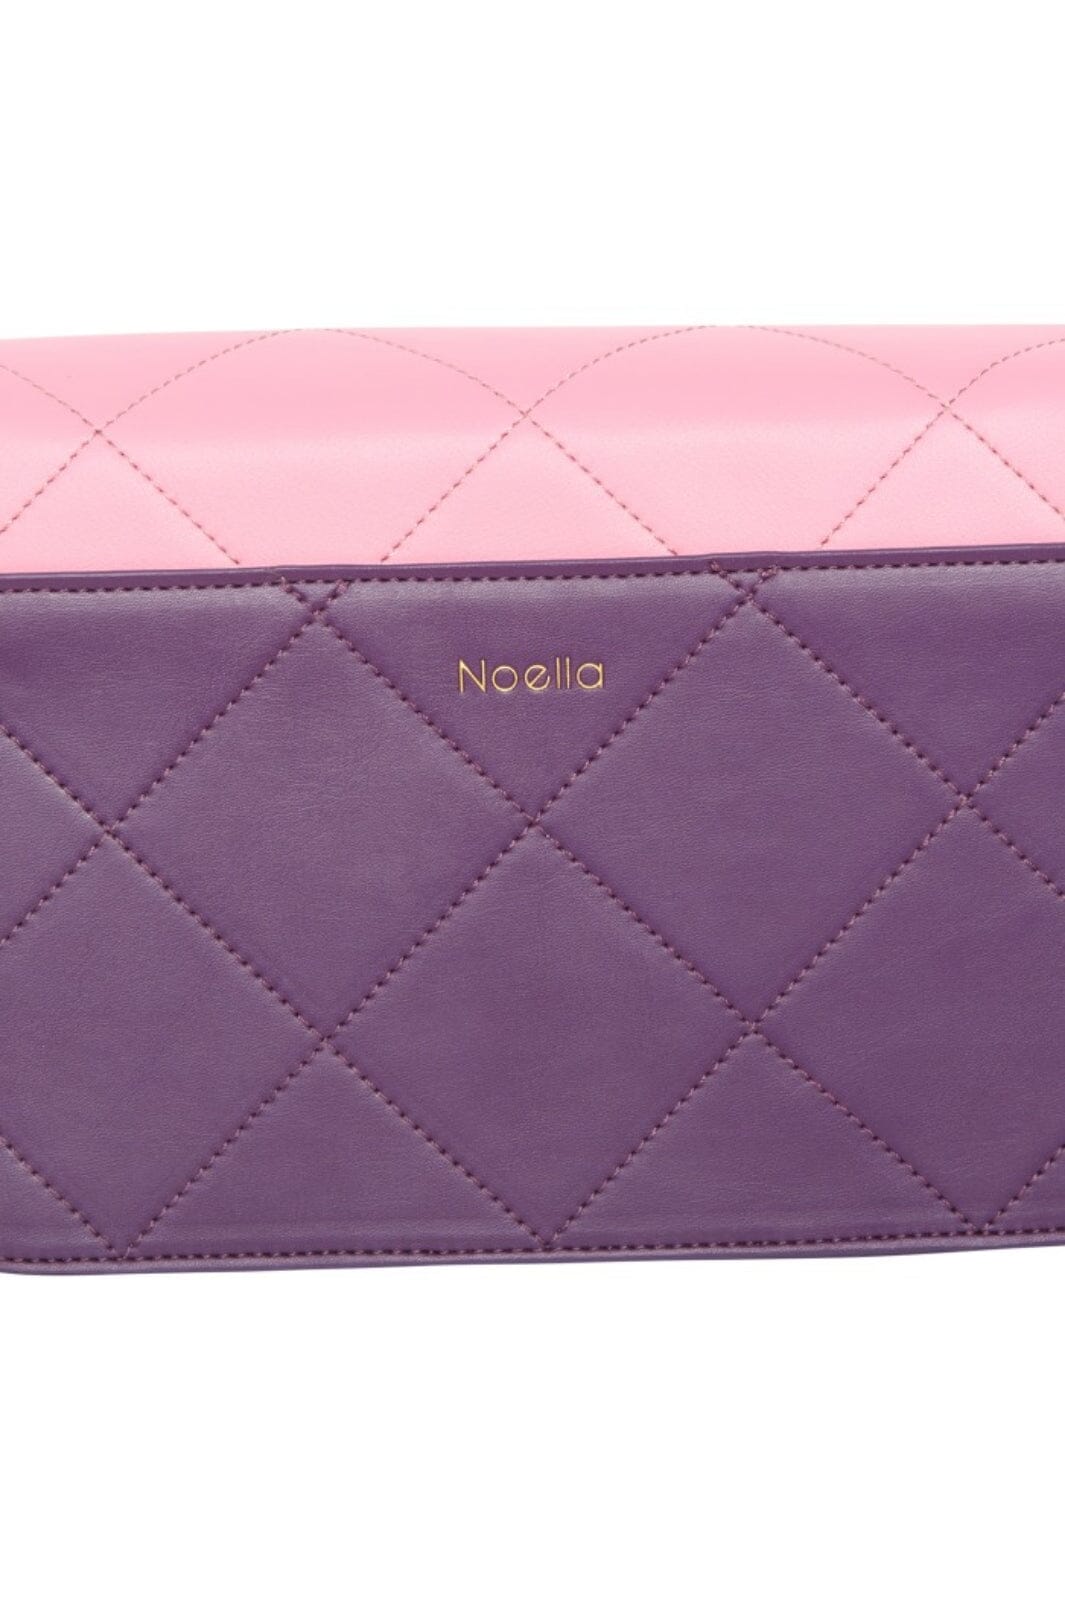 Noella - Blanca Multi Compartment Bag - Plum/orange/light Pink Tasker 